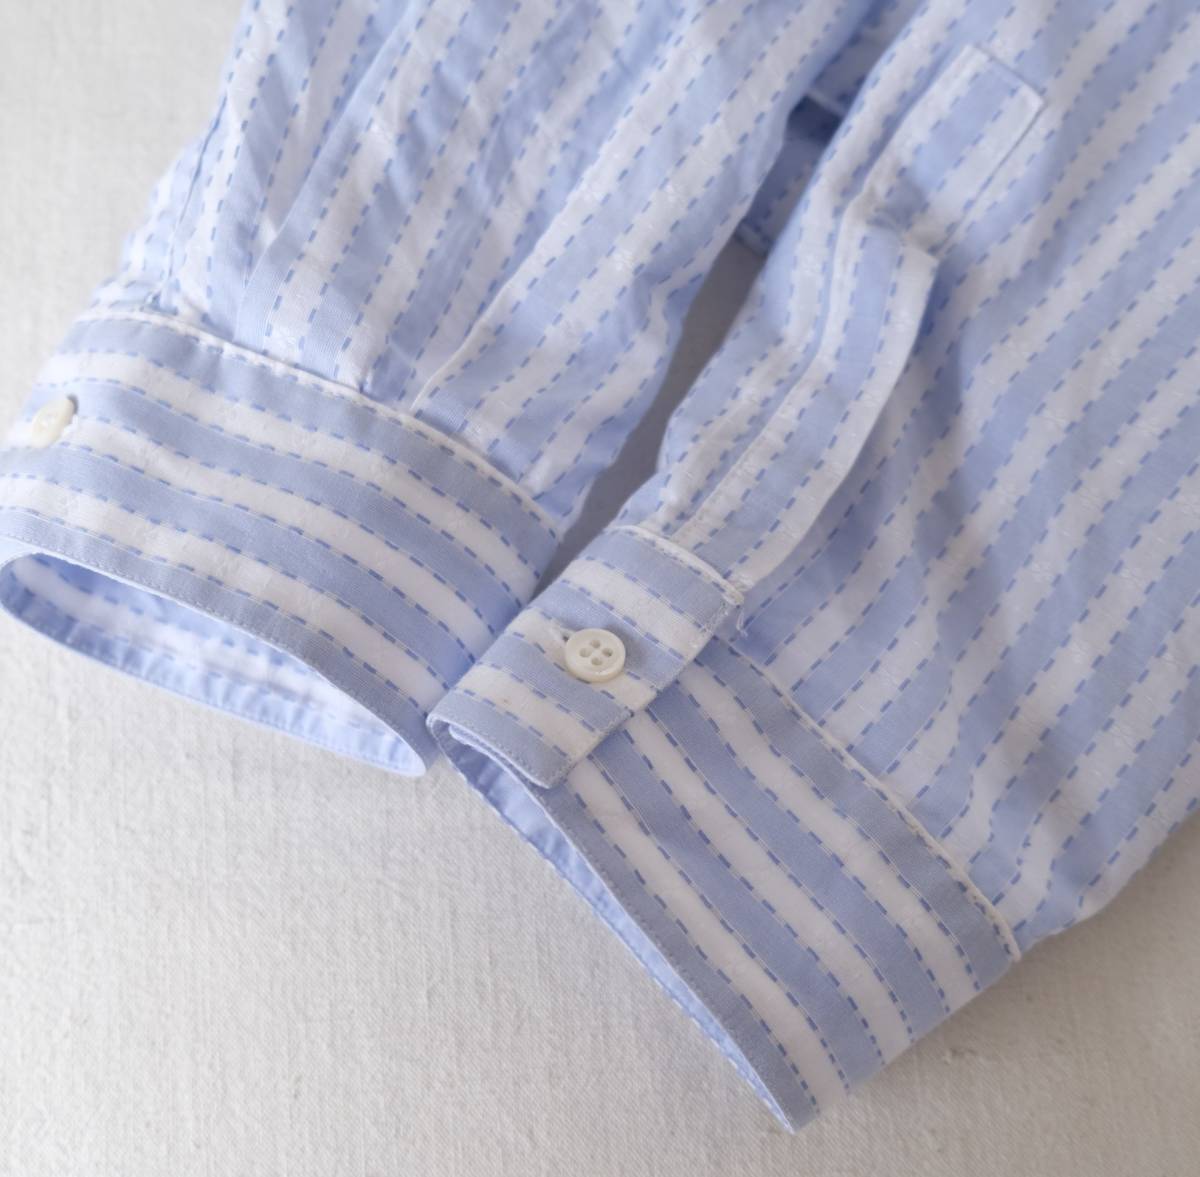 [ GIANNI VERSACE ]# Gianni Versace stripe long sleeve shirt / light blue white light blue white / 52 / Italy made Vintage 